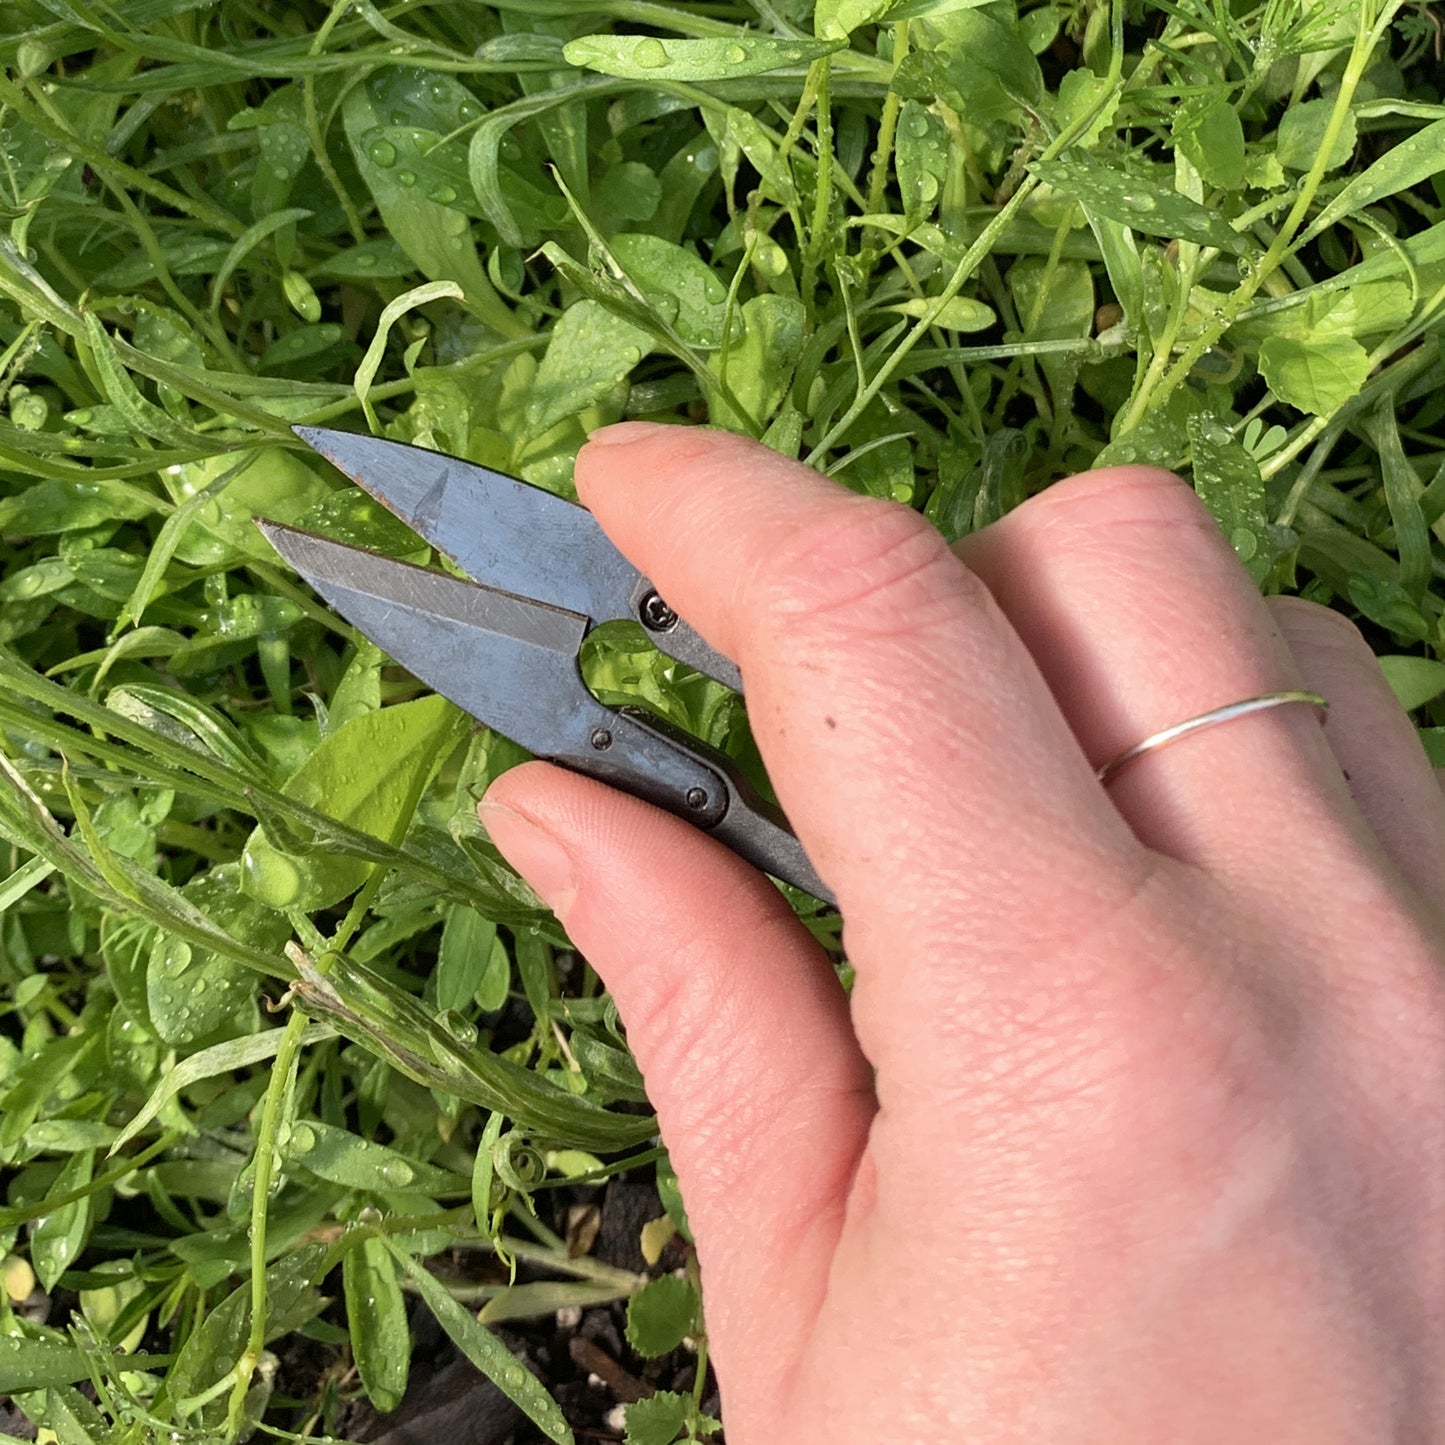 Ferry-Morse Carbon Steel Garden Snipping Scissors